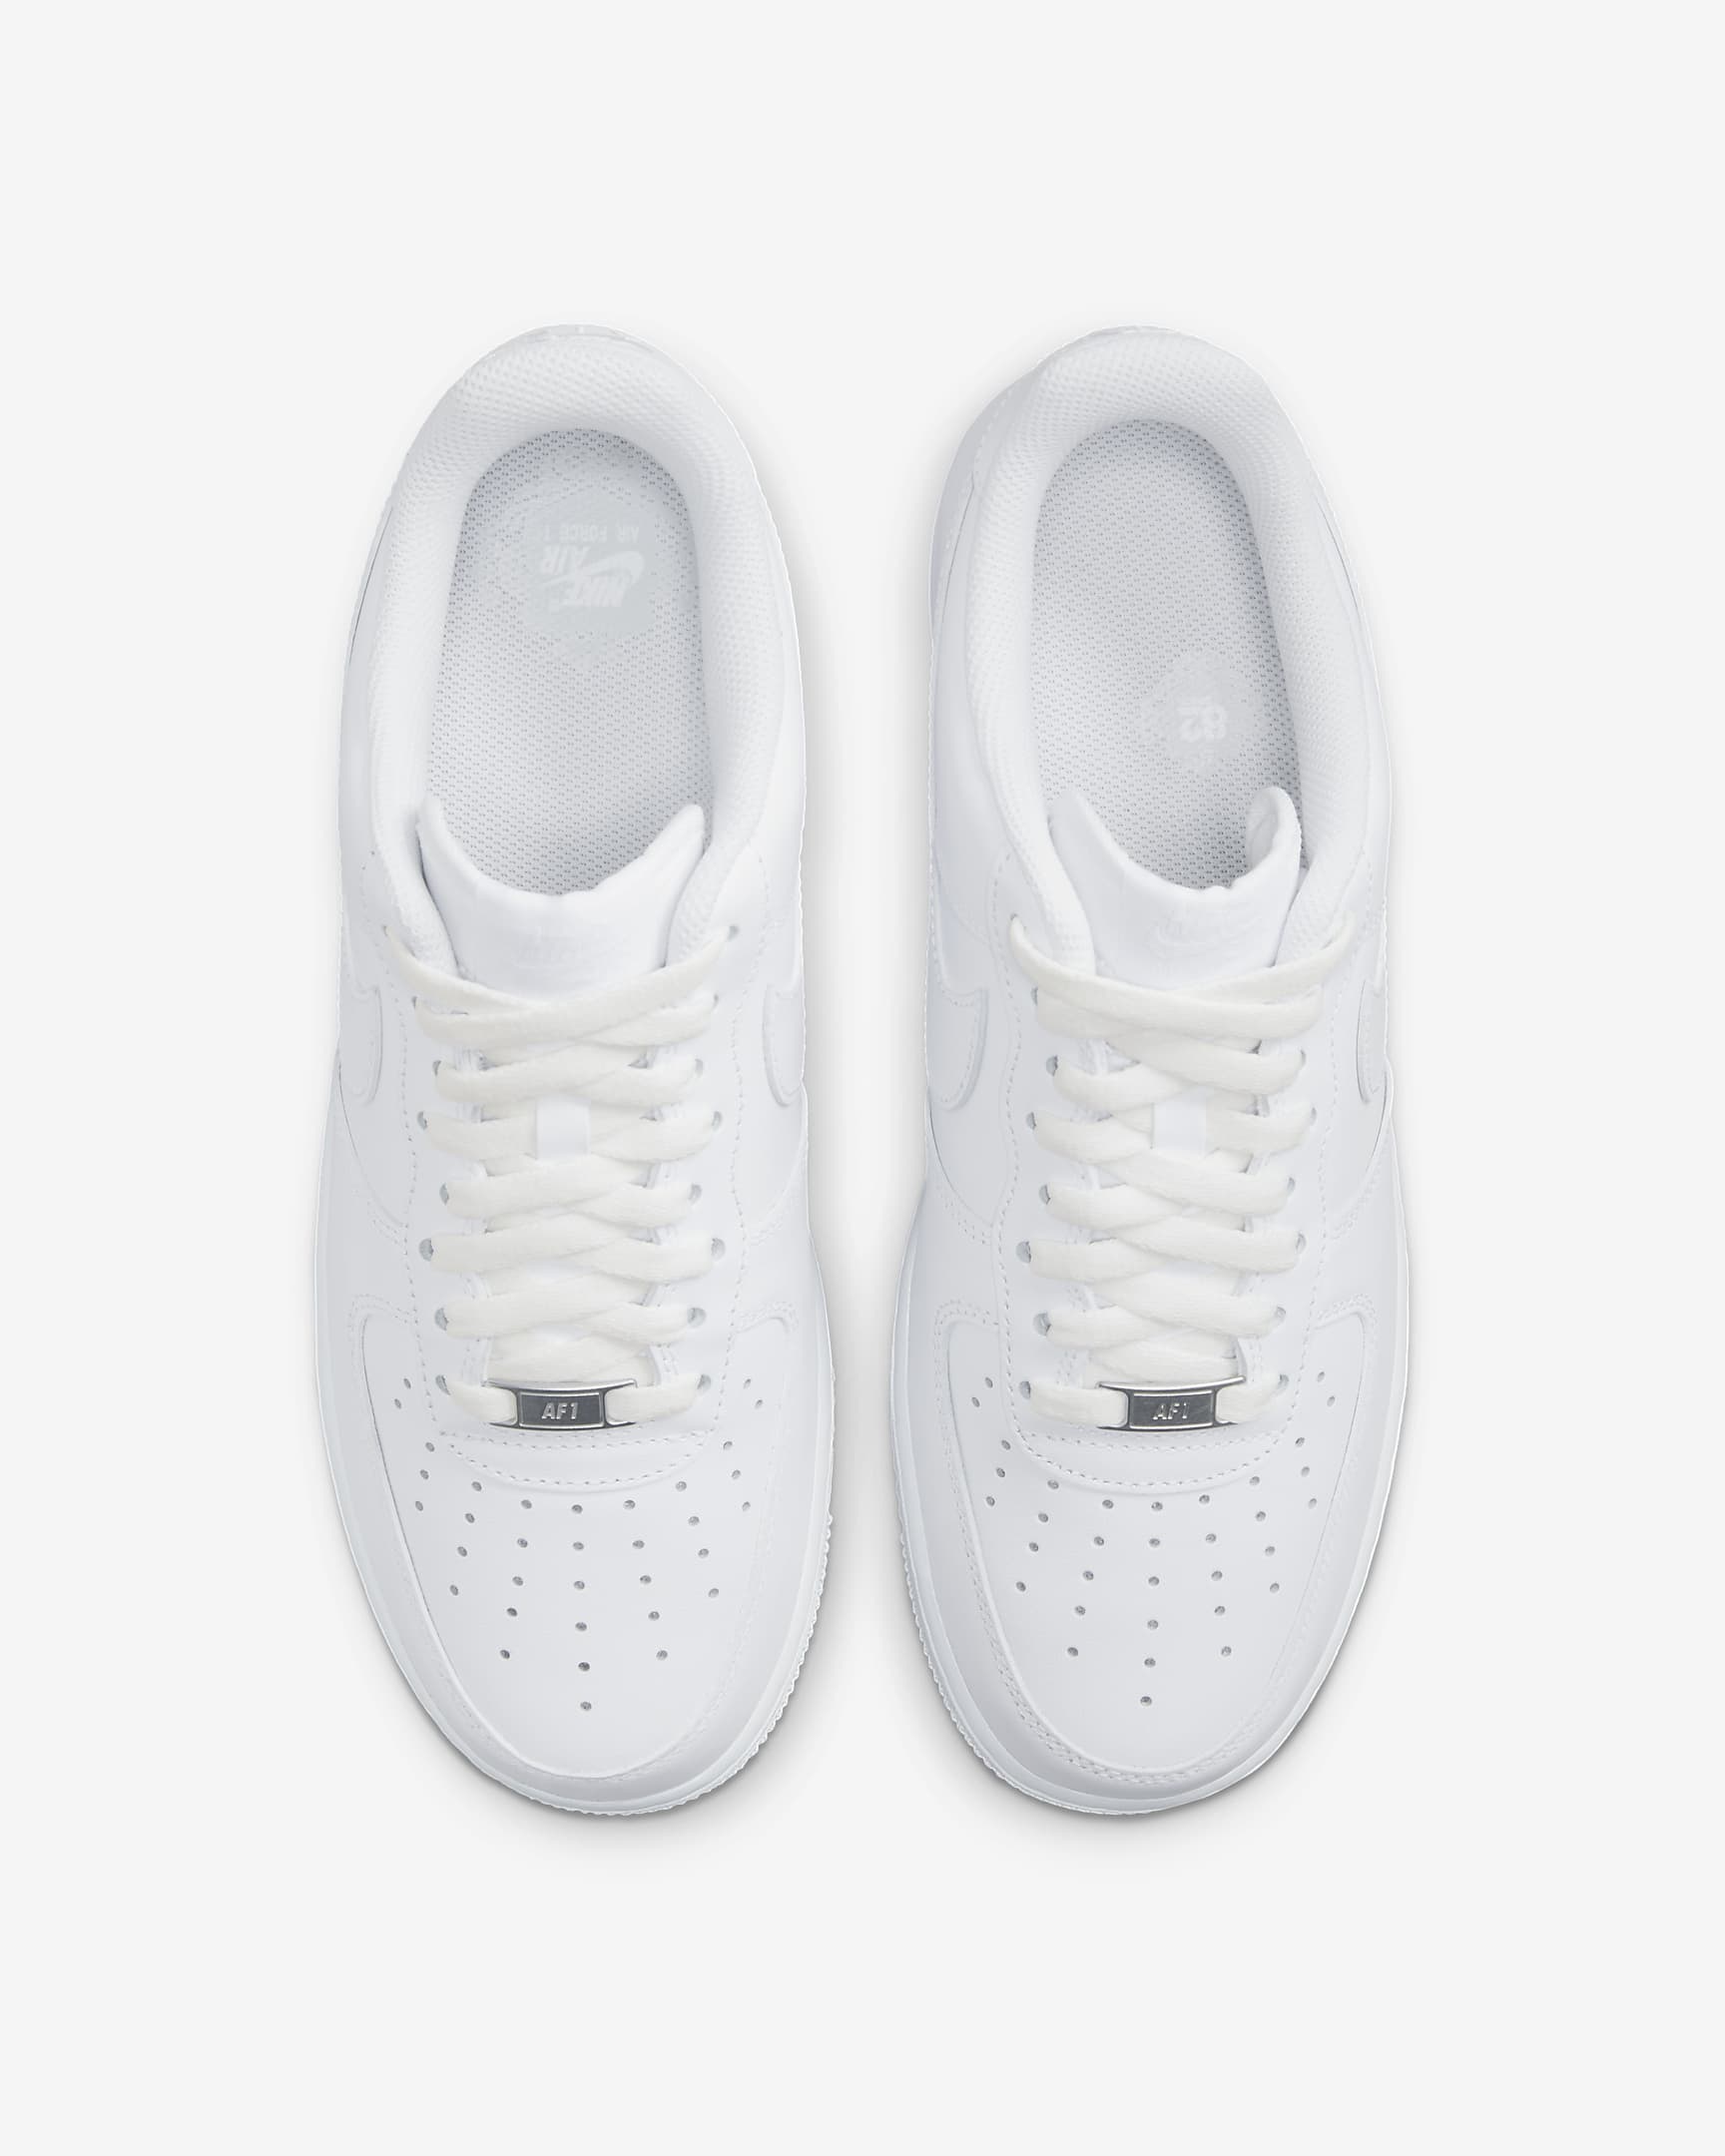 Nike Air Force 1 '07 Men's Shoes - White/White